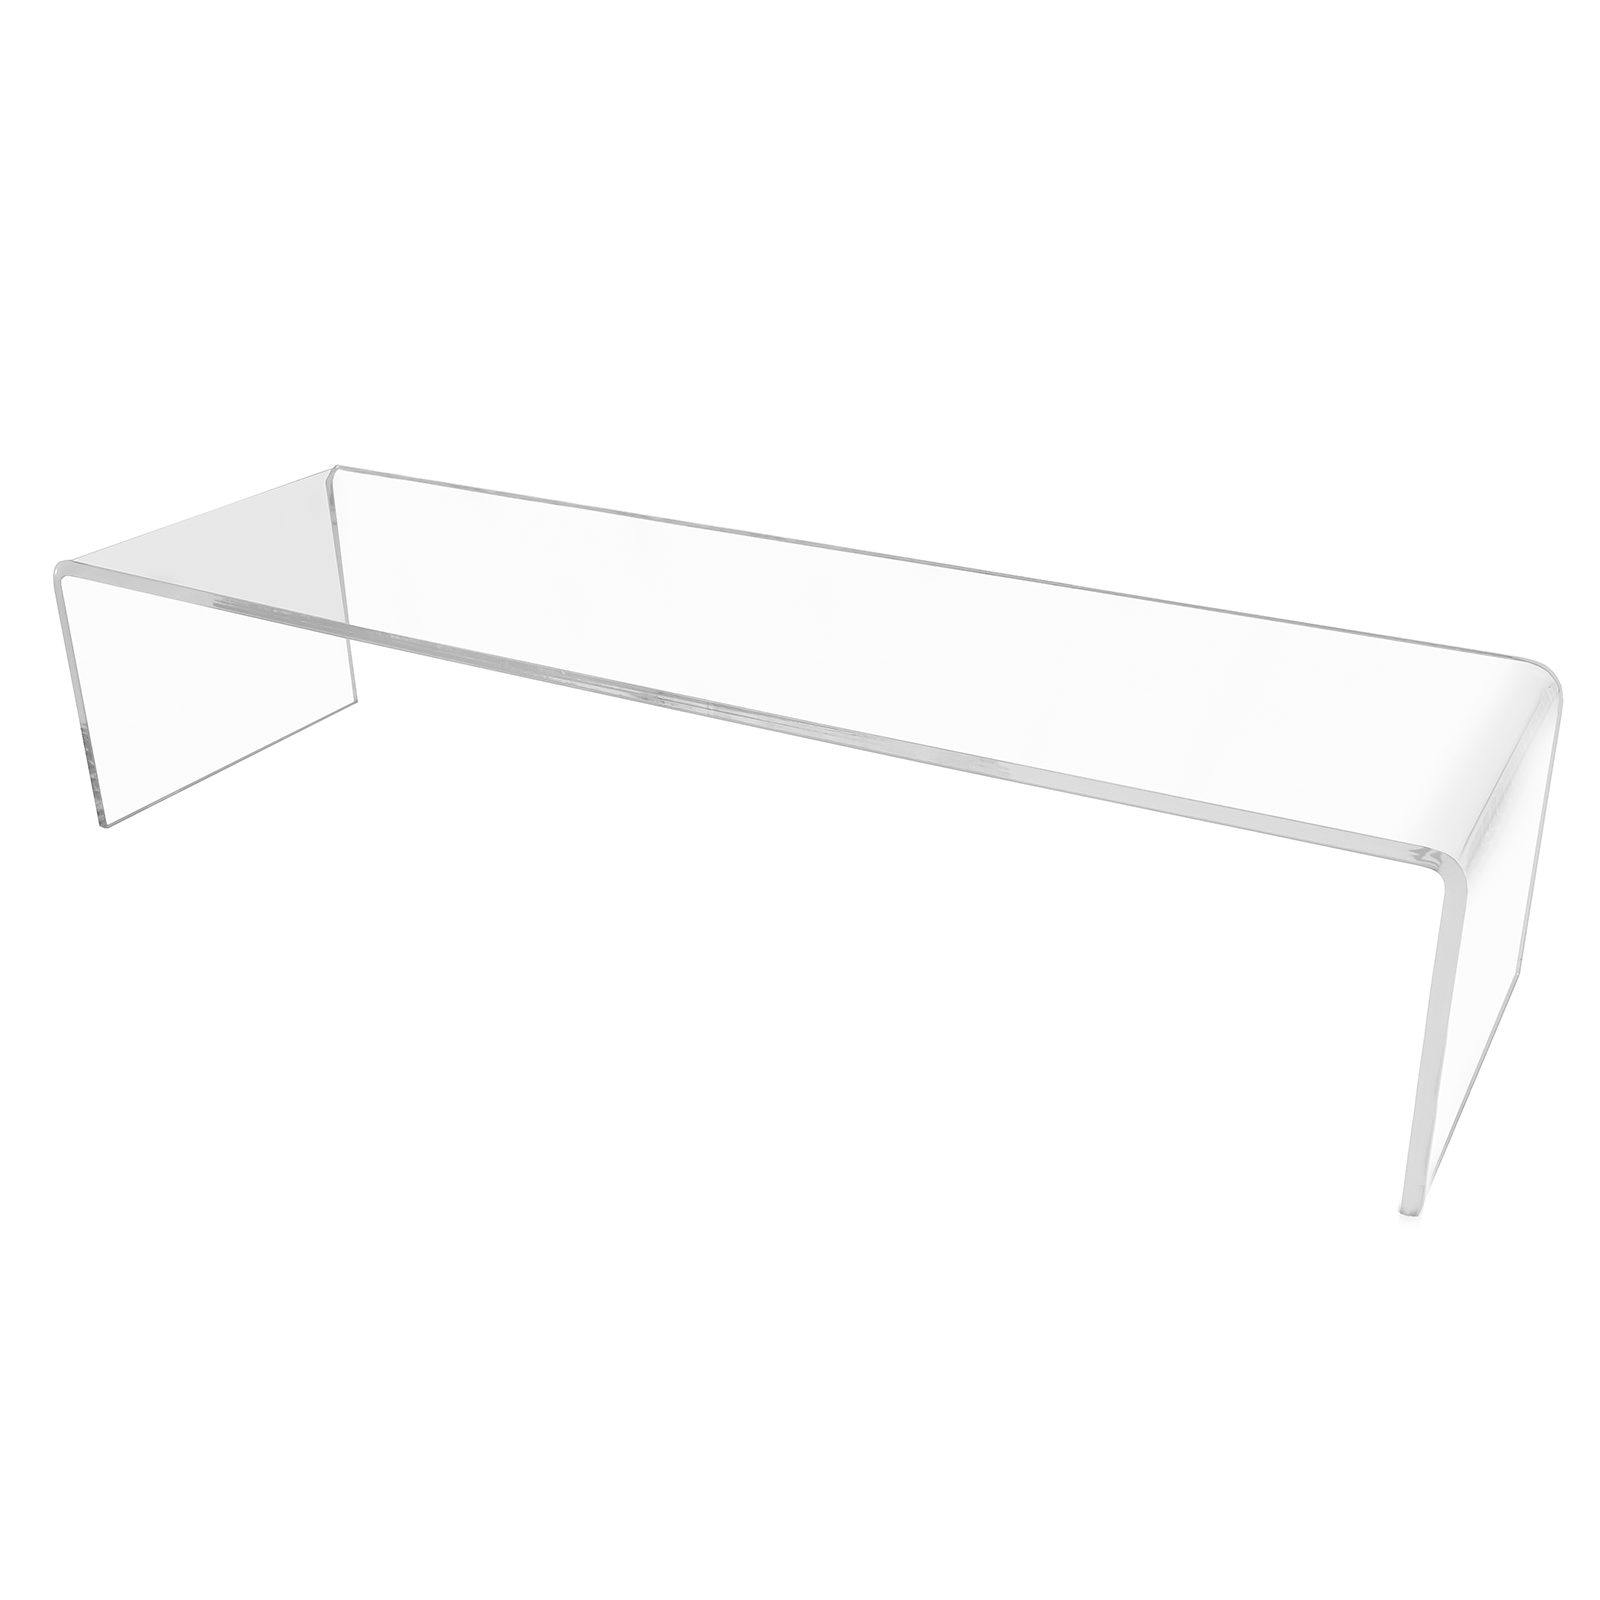 3R W Design Acrylic Display Shelves for Ikea Detolf Acrylic Display Shelves Stands Risers Plinths 4mm-thick-35cm-10cm-7.5cm 